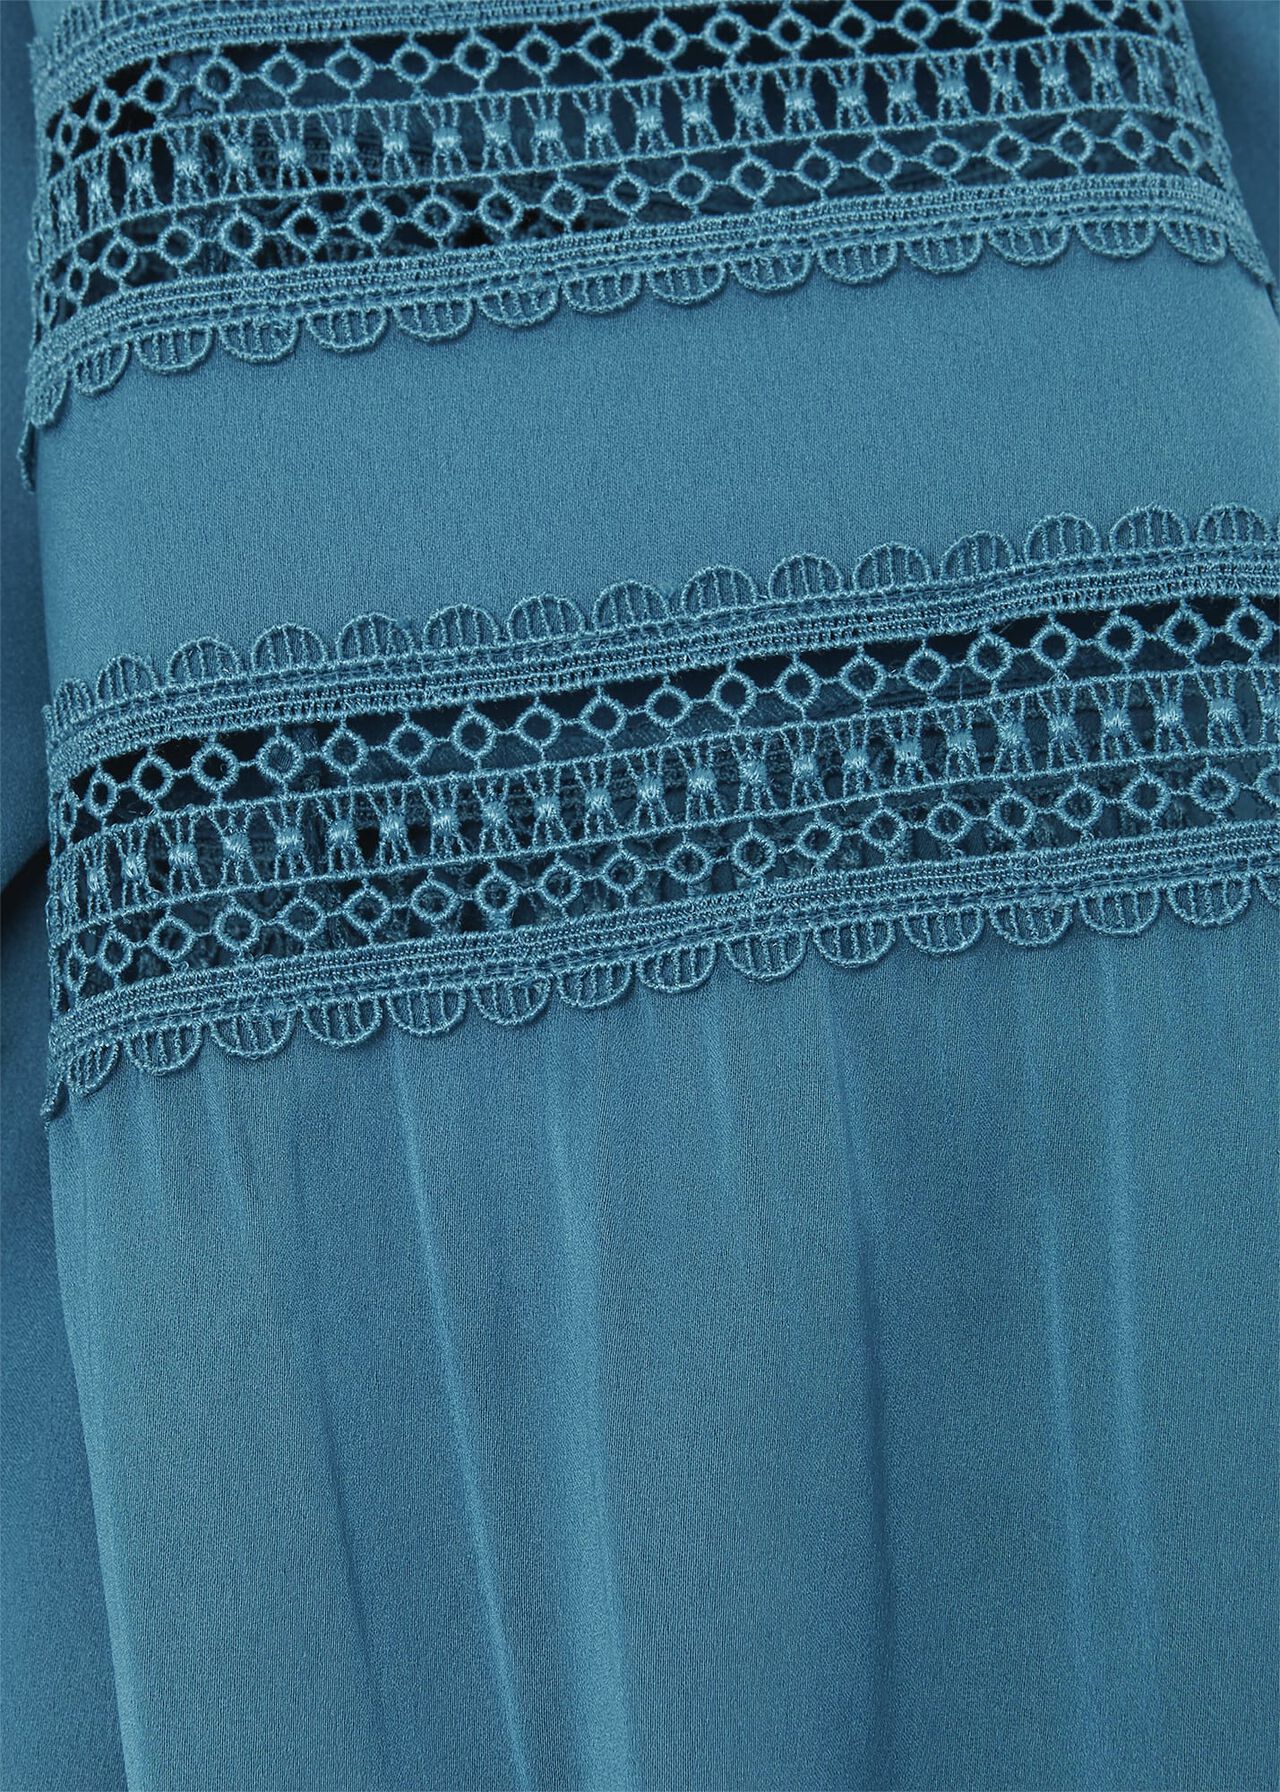 Evianna Lace Detail Blouse , Deep Jade Blue, hi-res